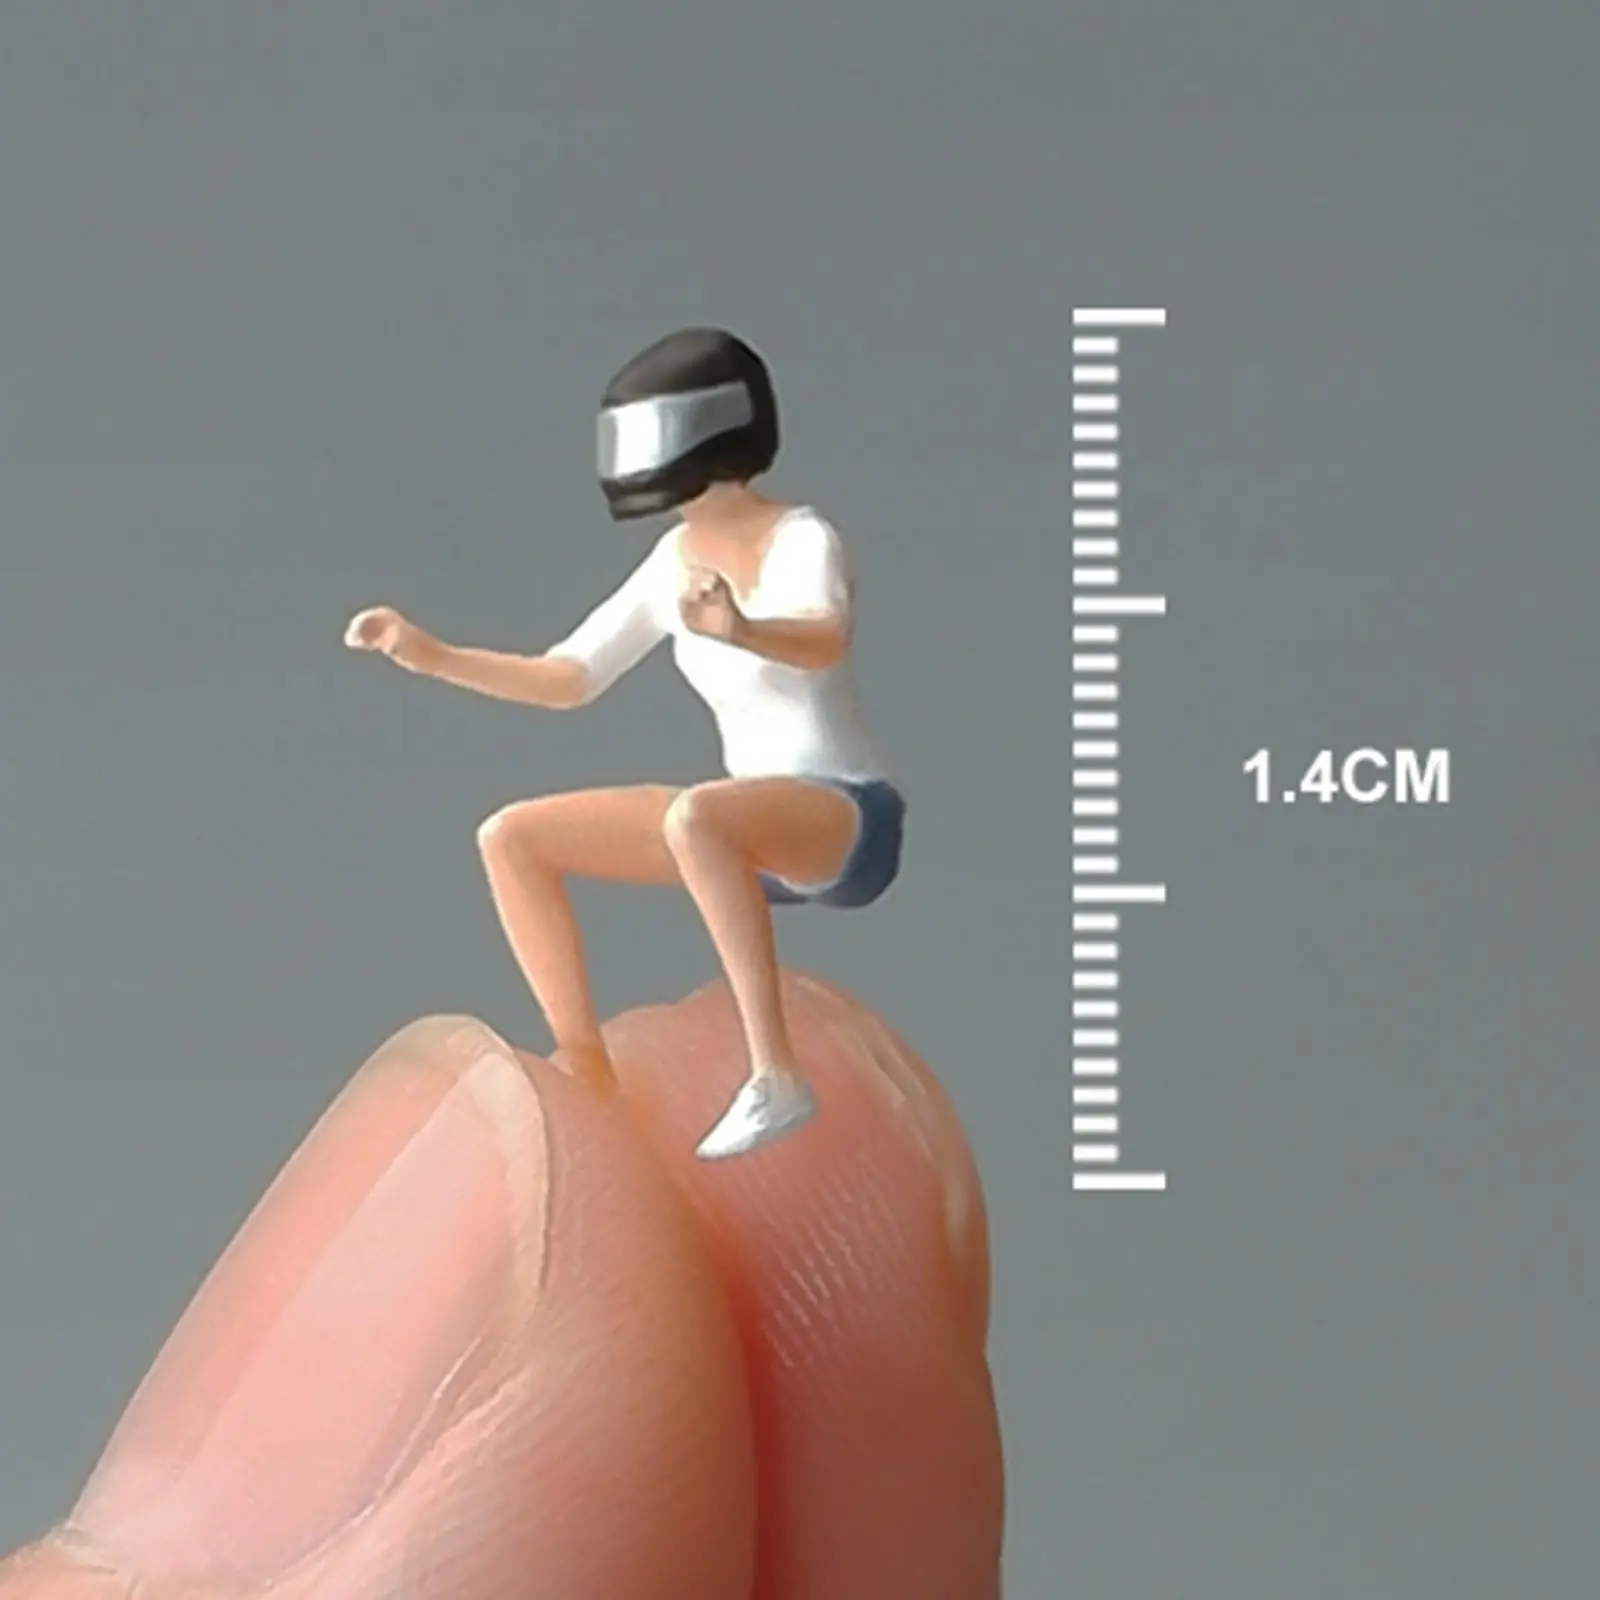 Miniature Model Figures Movie Props Realistic Figures Simulation Figurines DIY Layout Scenery Accs Resin Figures DIY Scene Decor